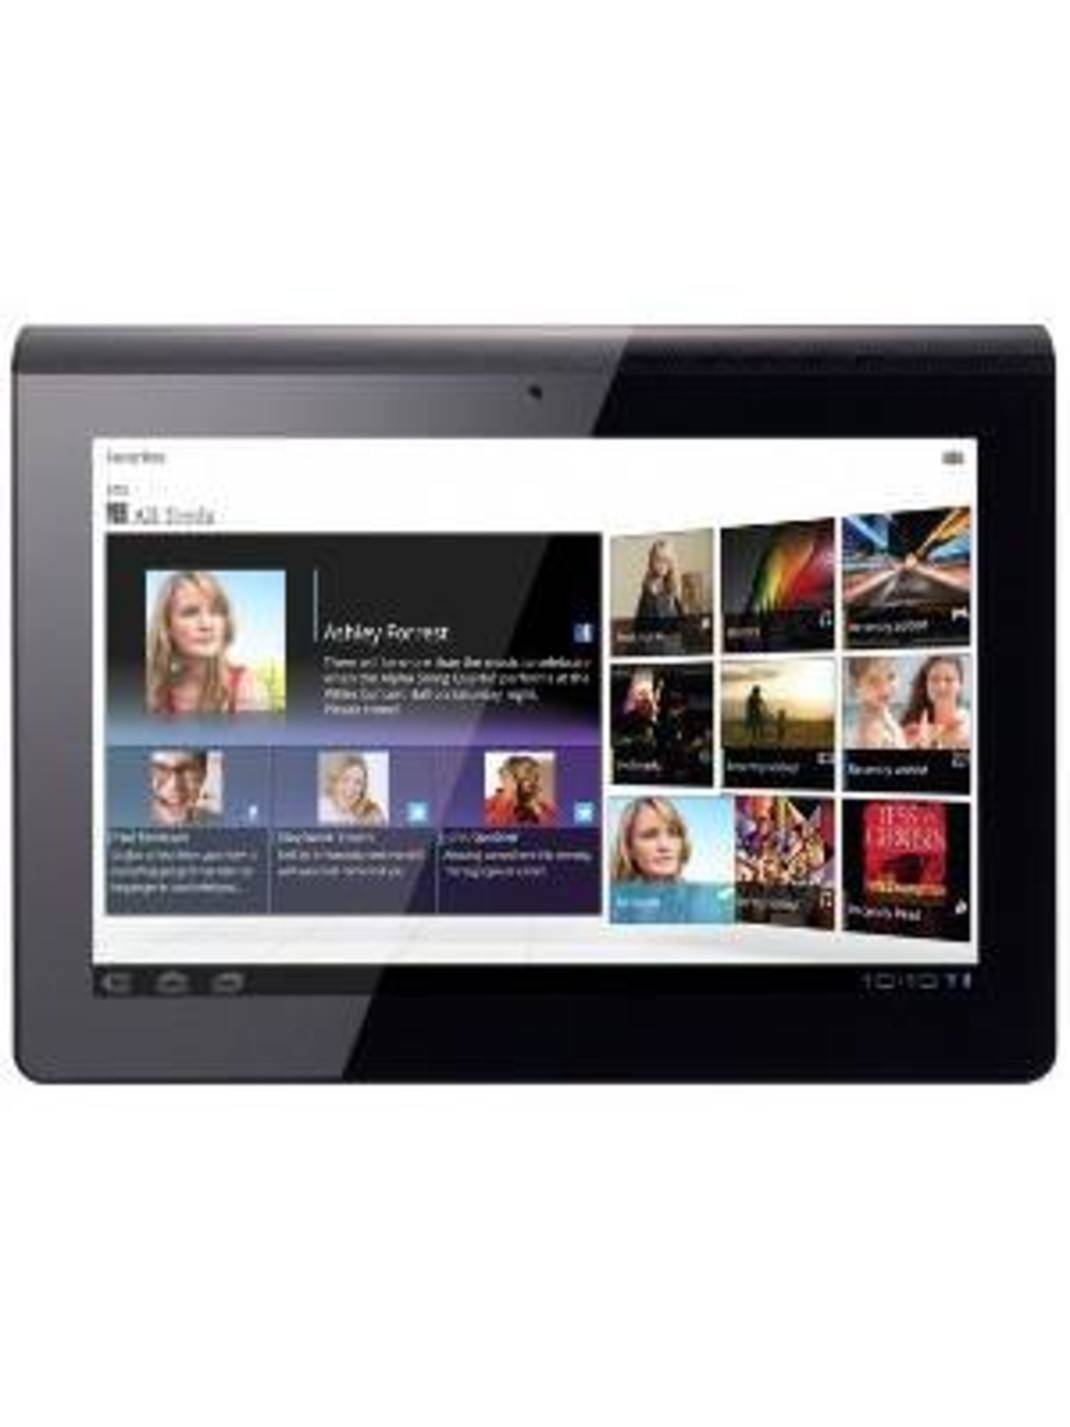 Sony Xperia Z2 Tablet vs Sony Xperia Z4 Tablet comparison - Tech Advisor